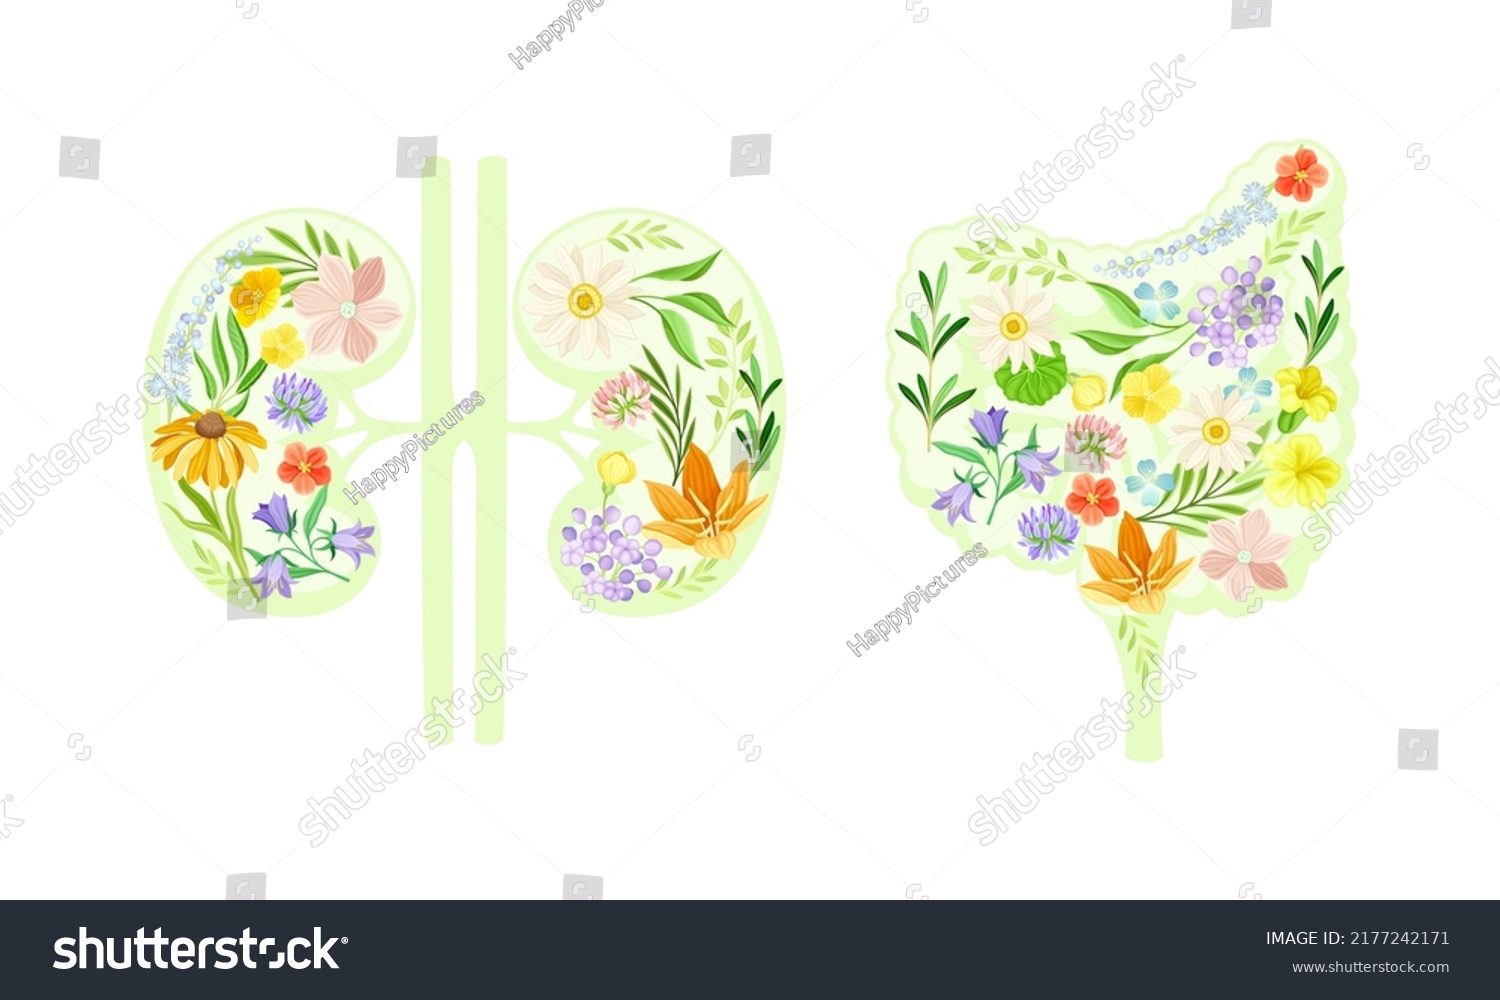 7,368 Kidneys blossom Images, Stock Photos & Vectors | Shutterstock